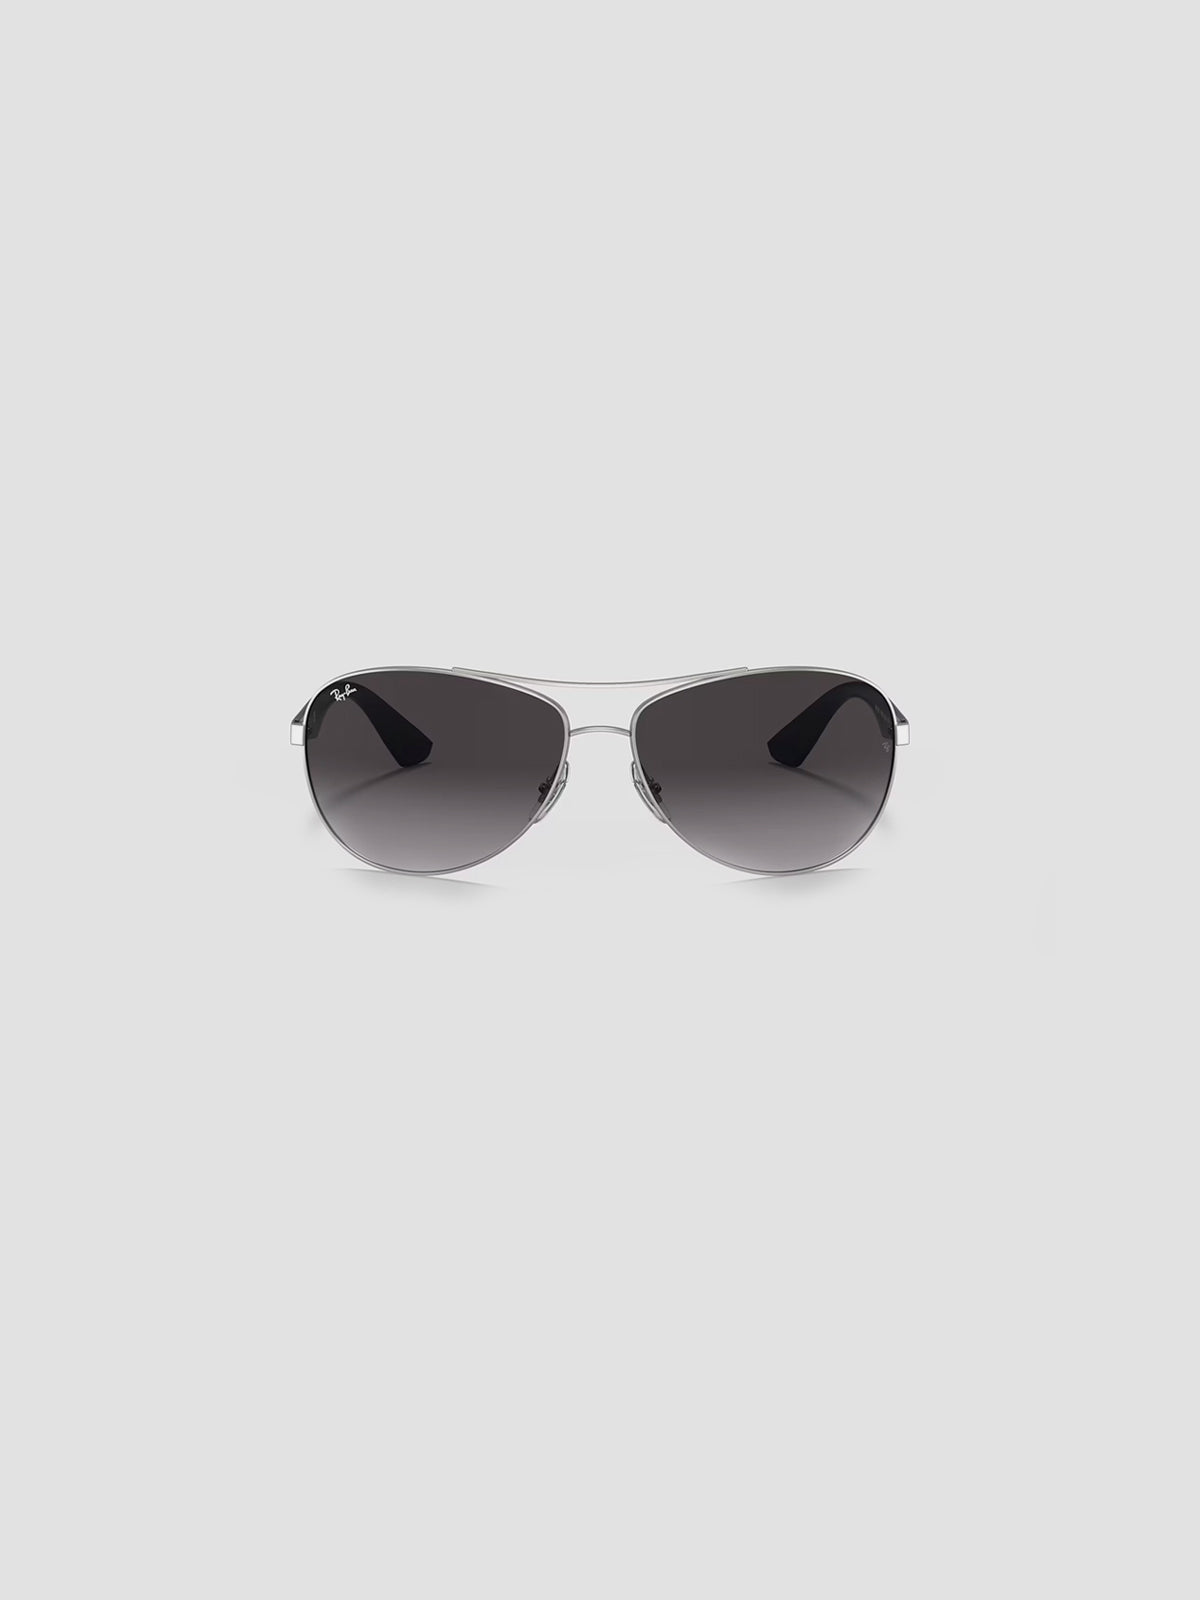 Ray-Ban RB3526 Sunglasses